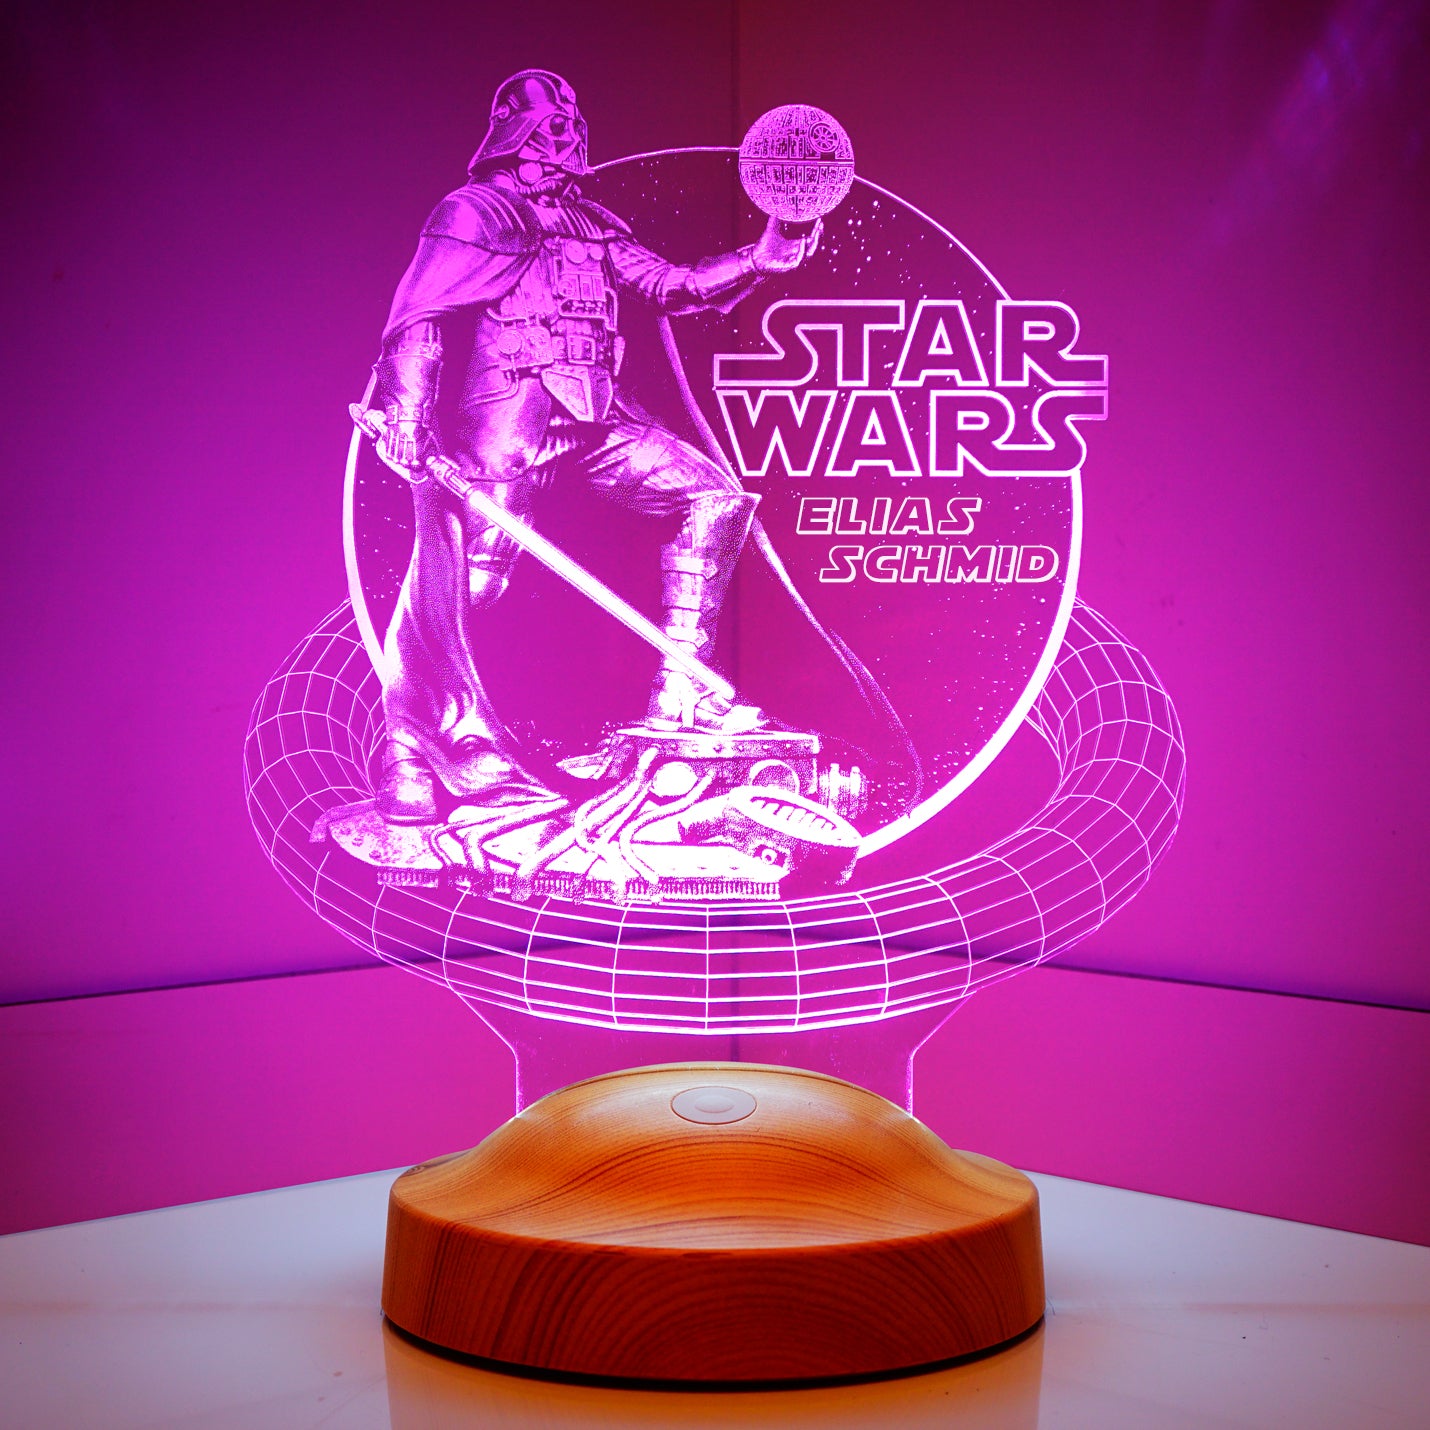 Darth Vader Star Wars lamp 3D Vision LED night light with custom text